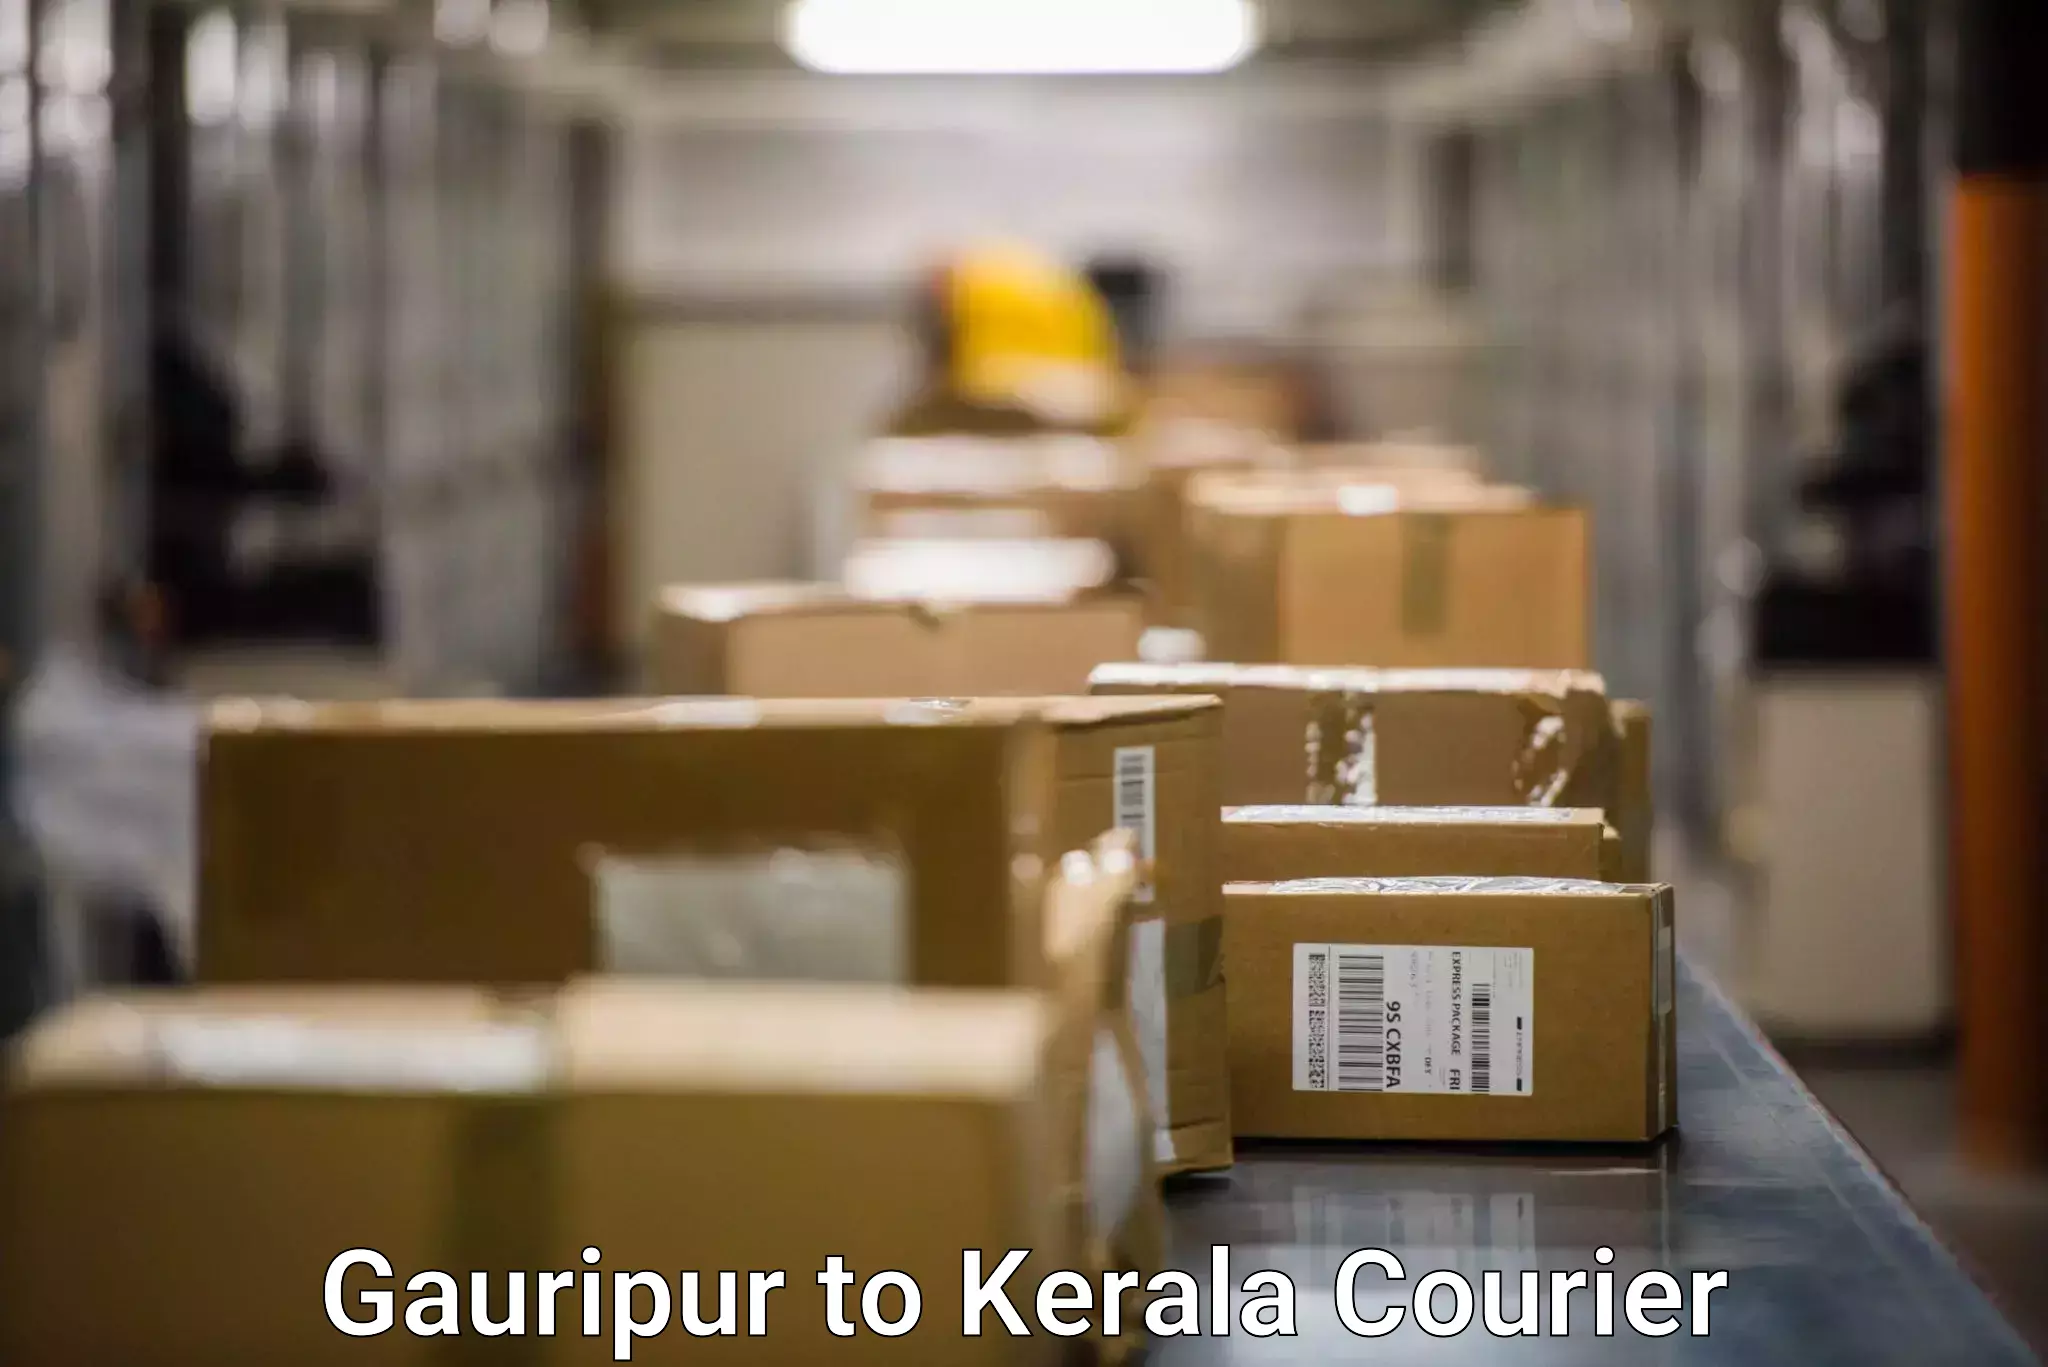 International parcel service Gauripur to Kerala